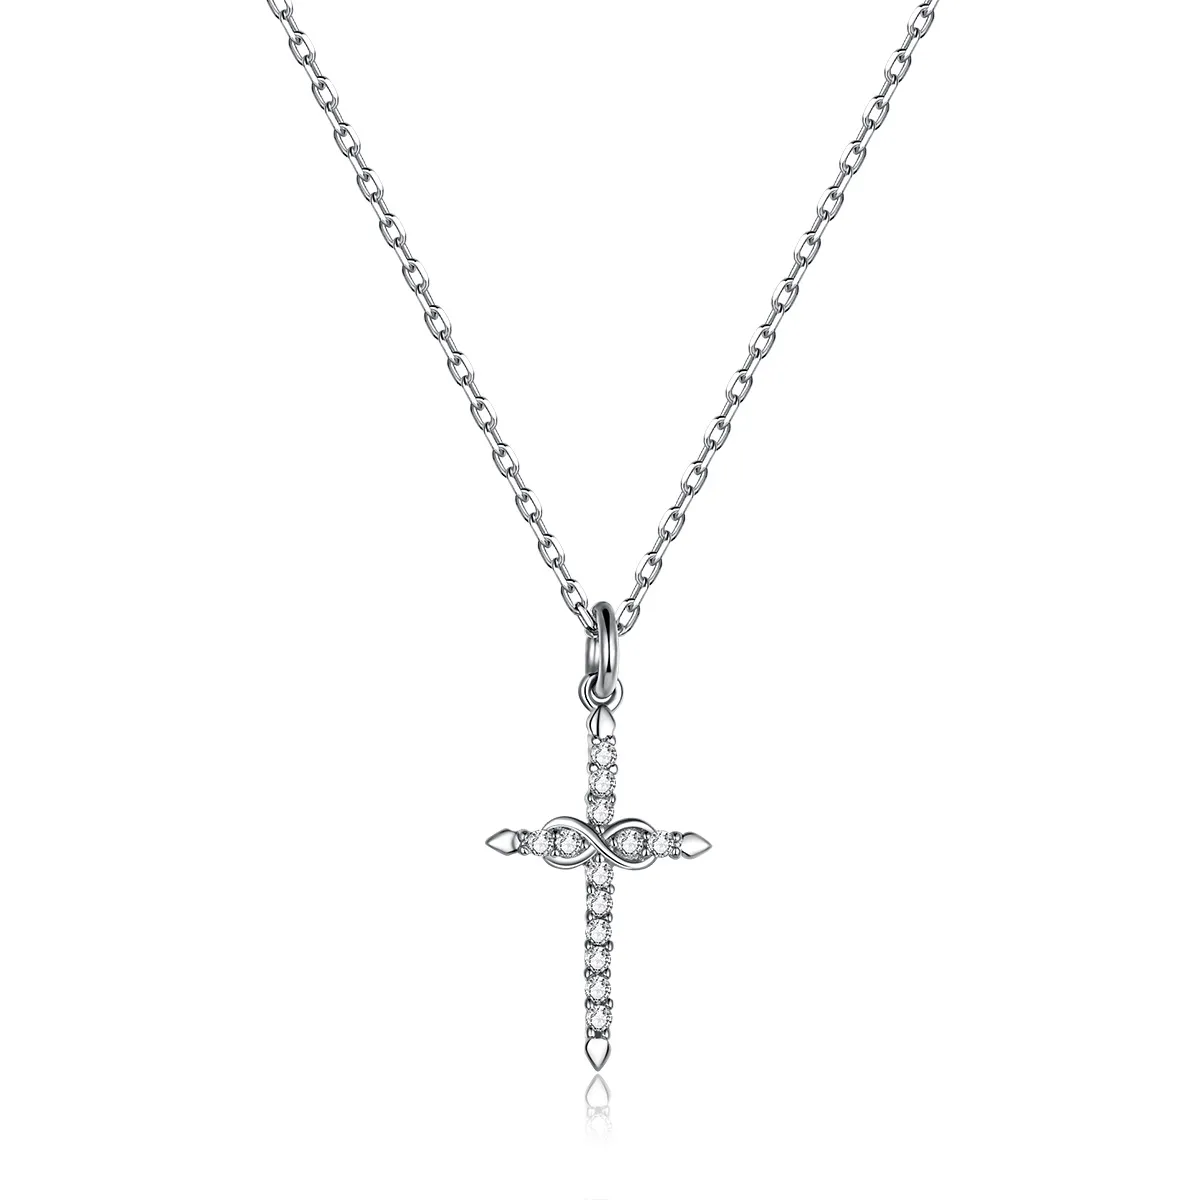 Pandora Style Cross of Love Necklace - BSN184